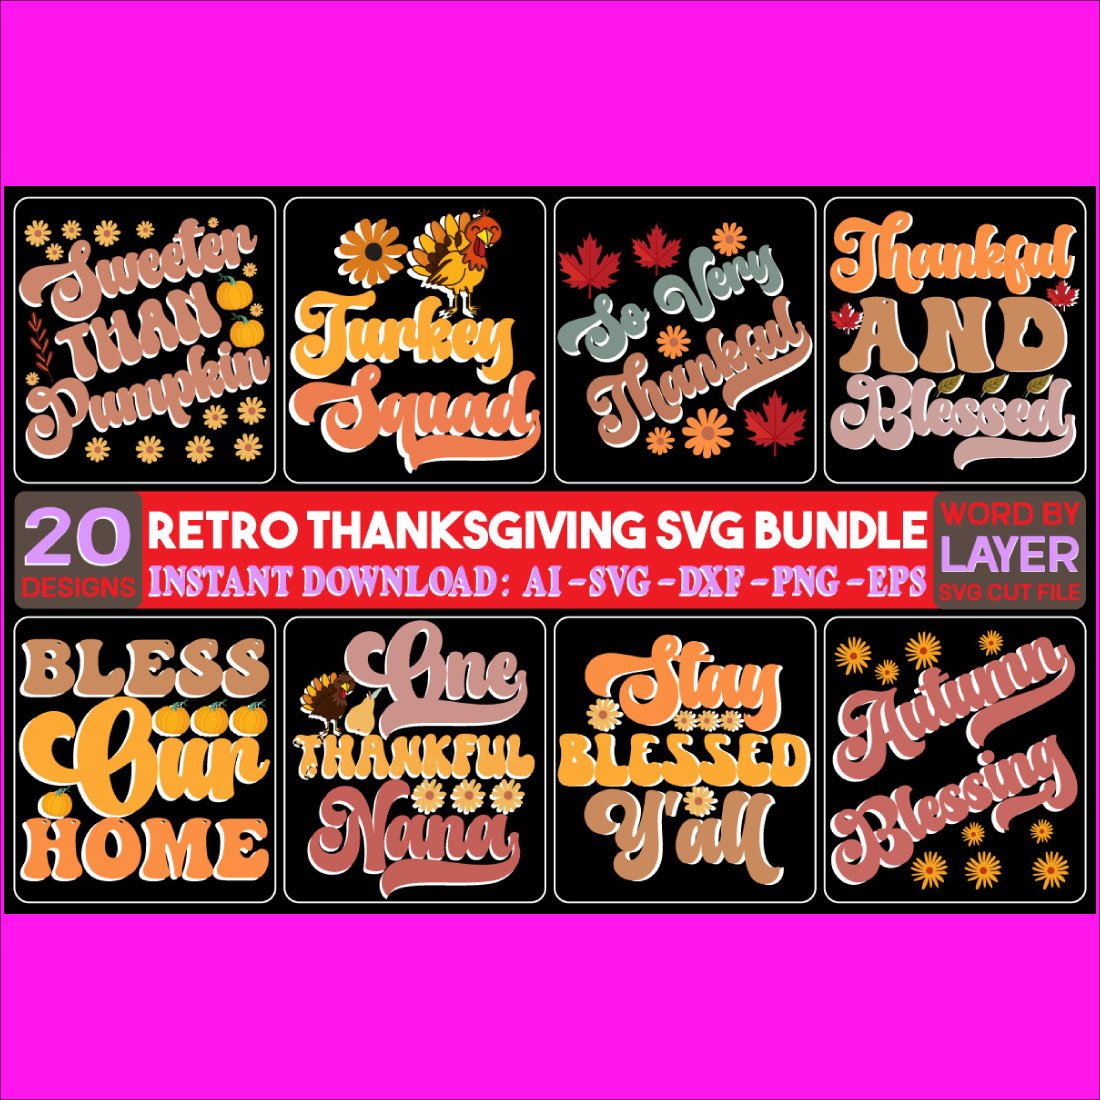 Retro Thanksgiving SVG Bundle cover image.